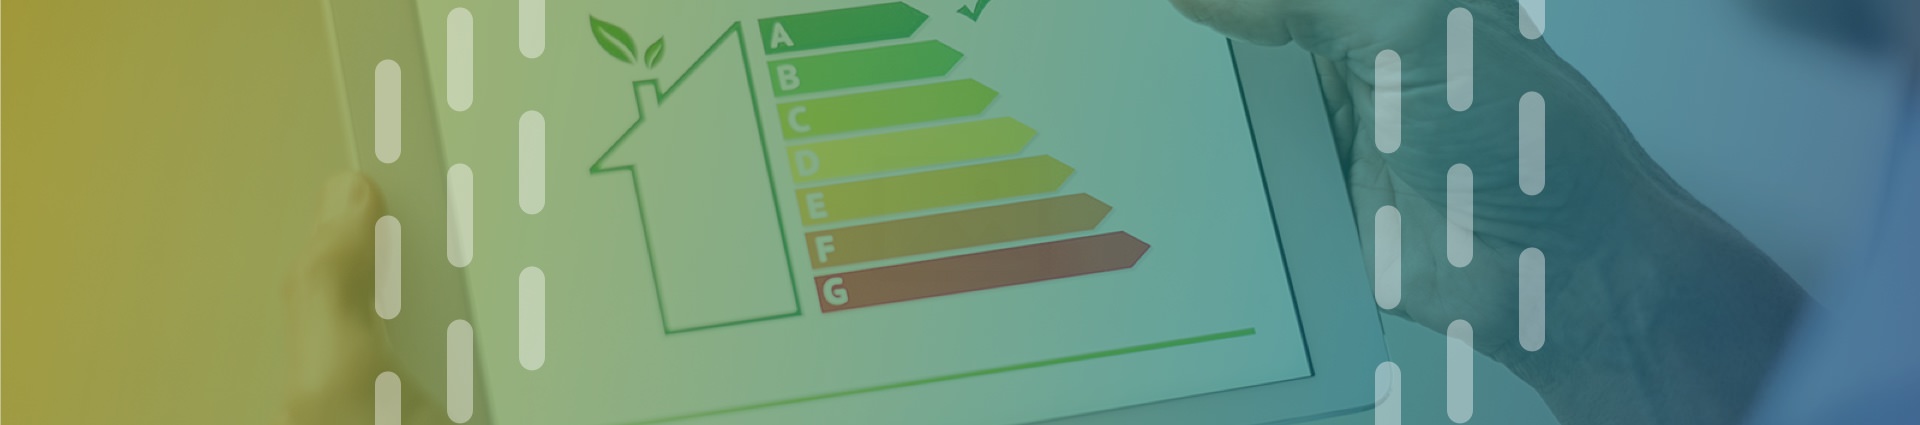 indice di classe di efficienza energetica A per la riqualificazione di edifici